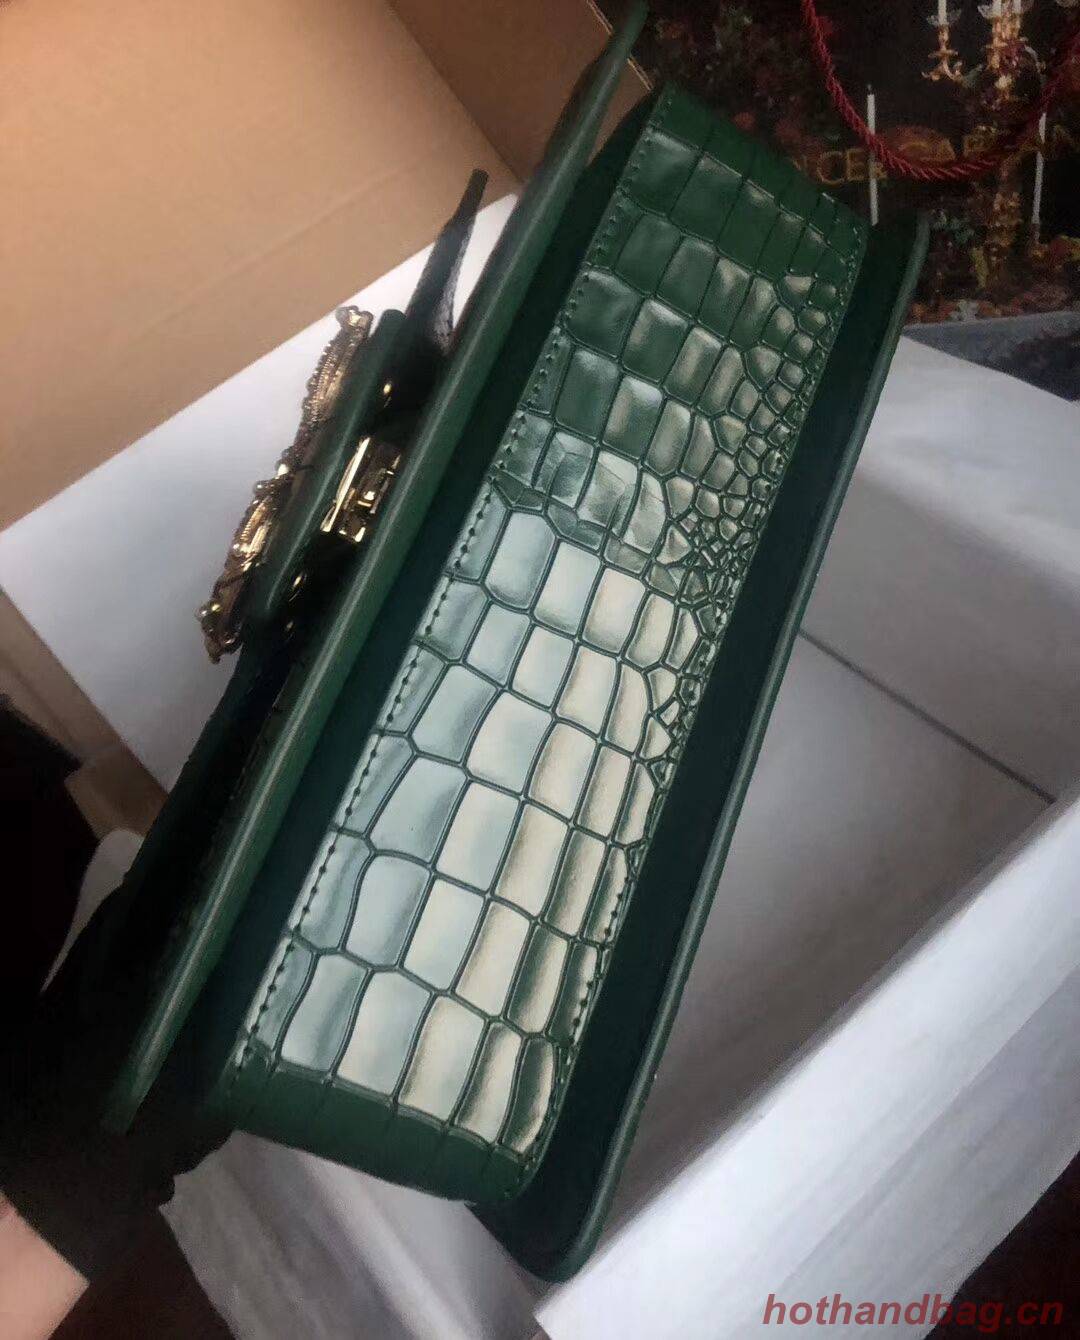 Dolce & Gabbana Origianl Crocodile Leather Bag 4916E Blackish green